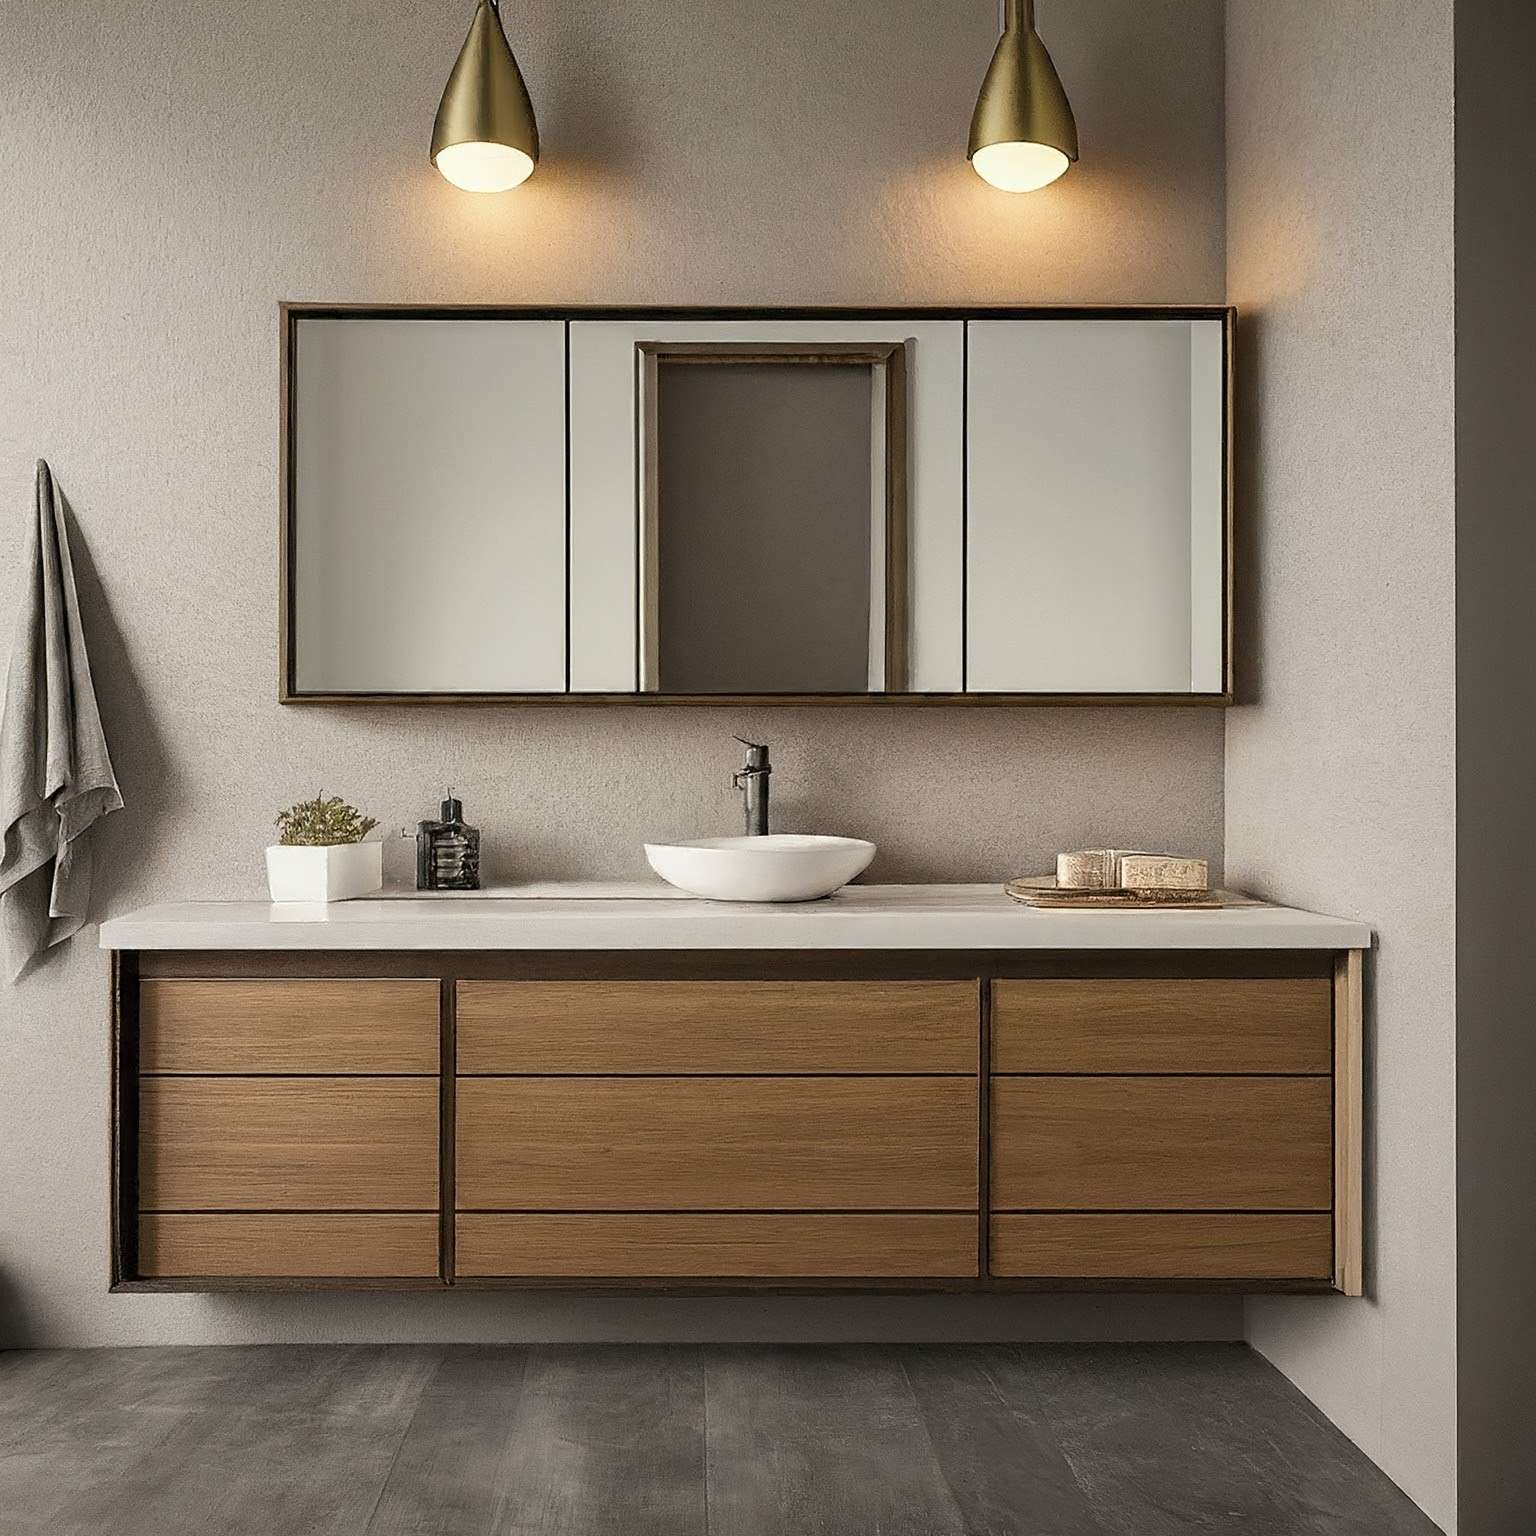 Sliding Mirror Cabinet Design for Bathroom